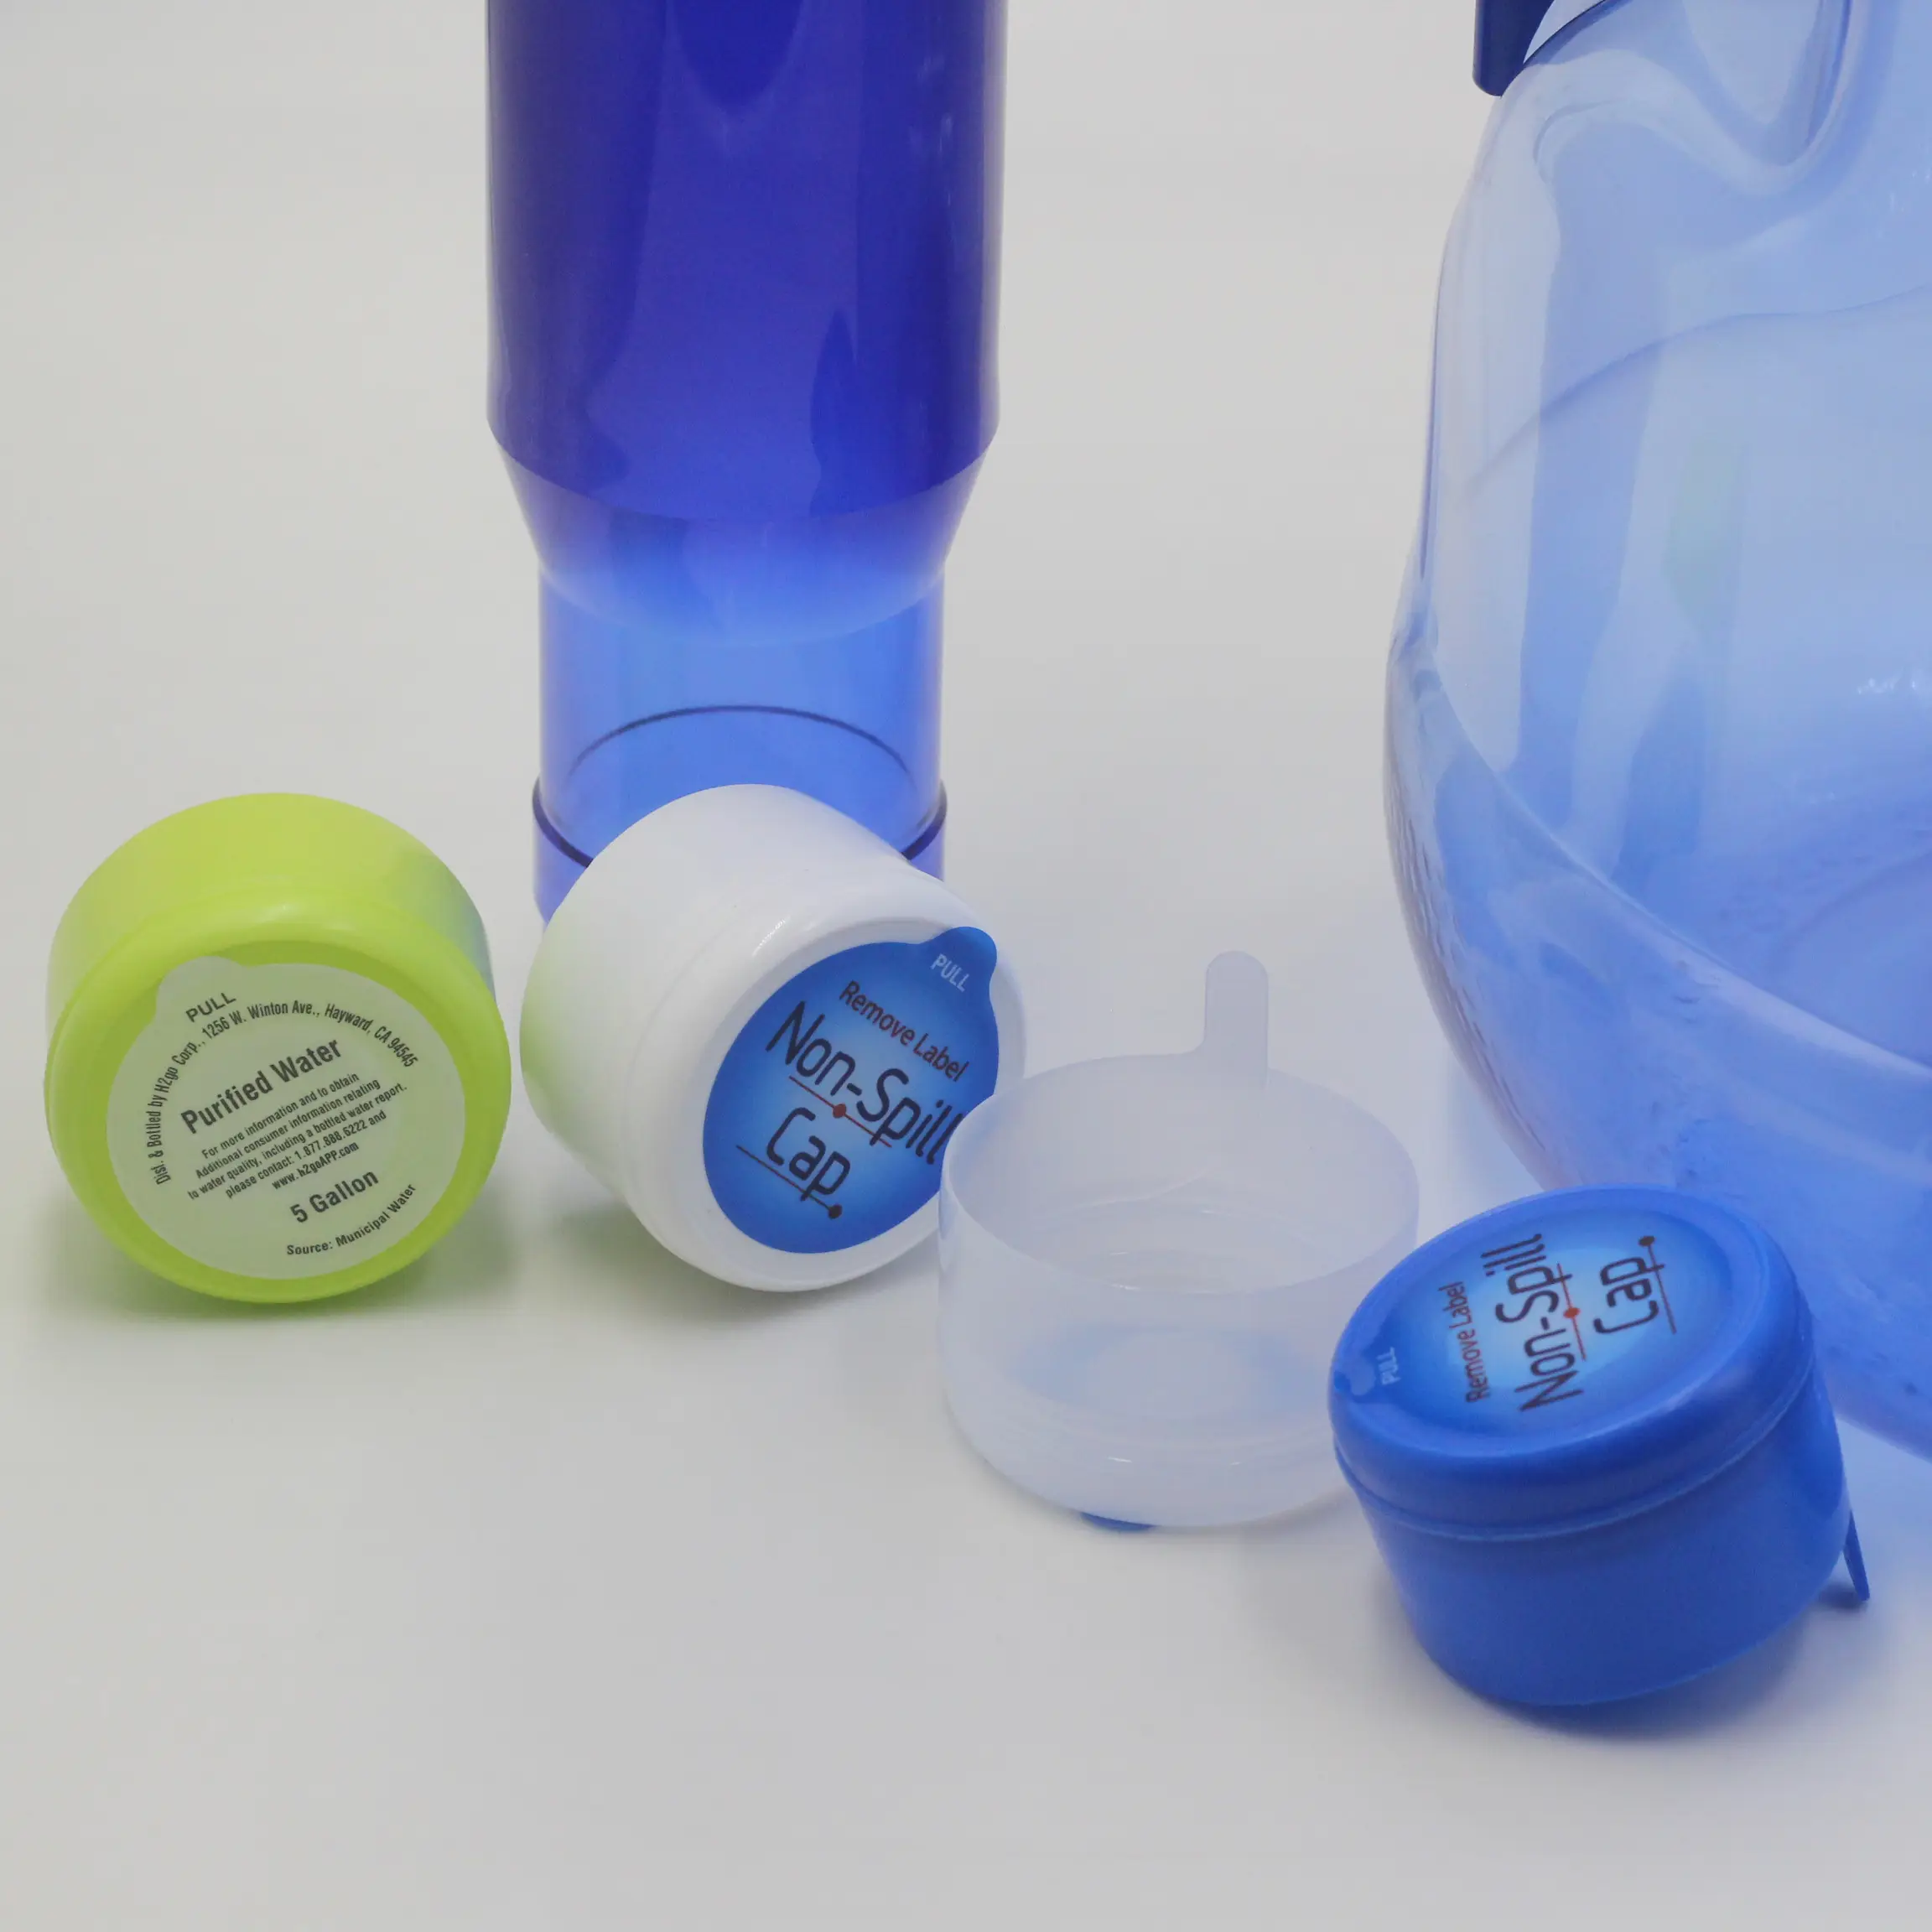 Galon su şişe kapağı 3 galon 5 galon özelleştirilmiş plastik galon kap etiket